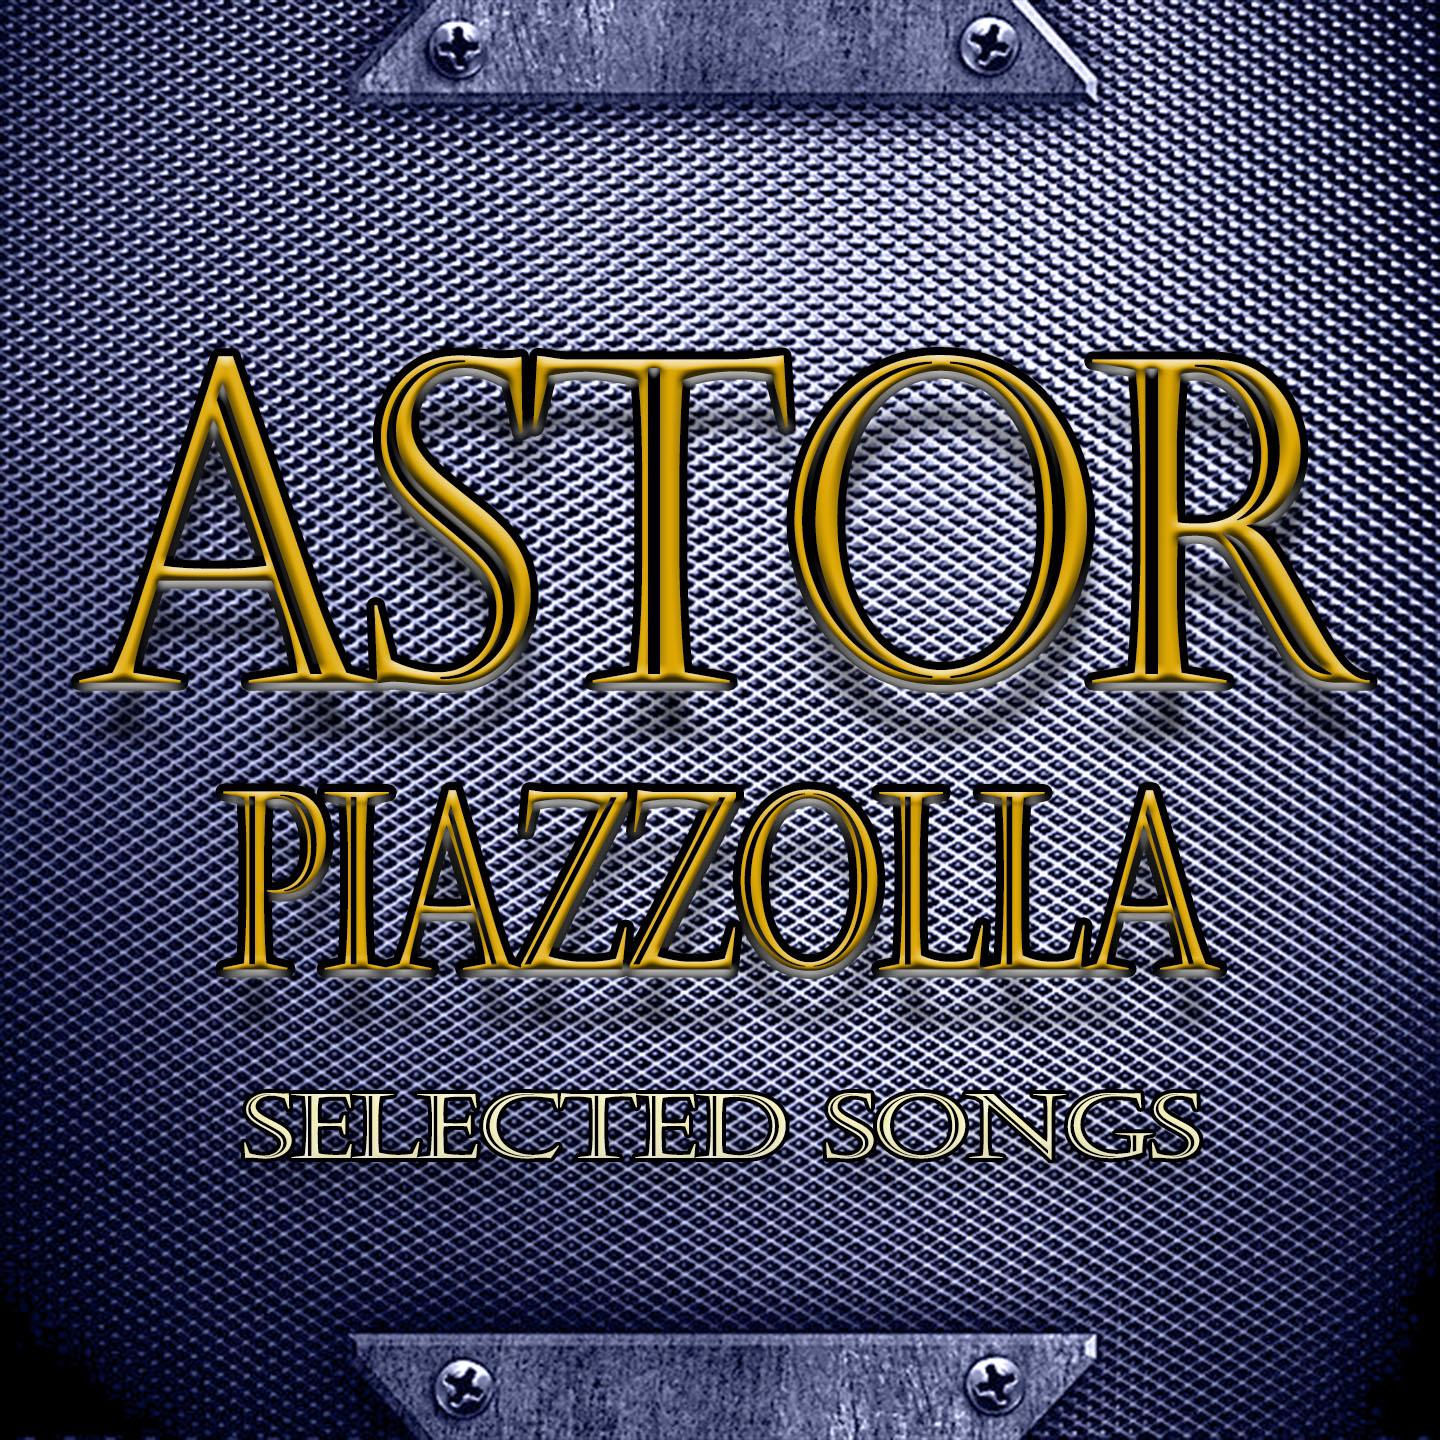 Astor Piazzolla Selected Songs